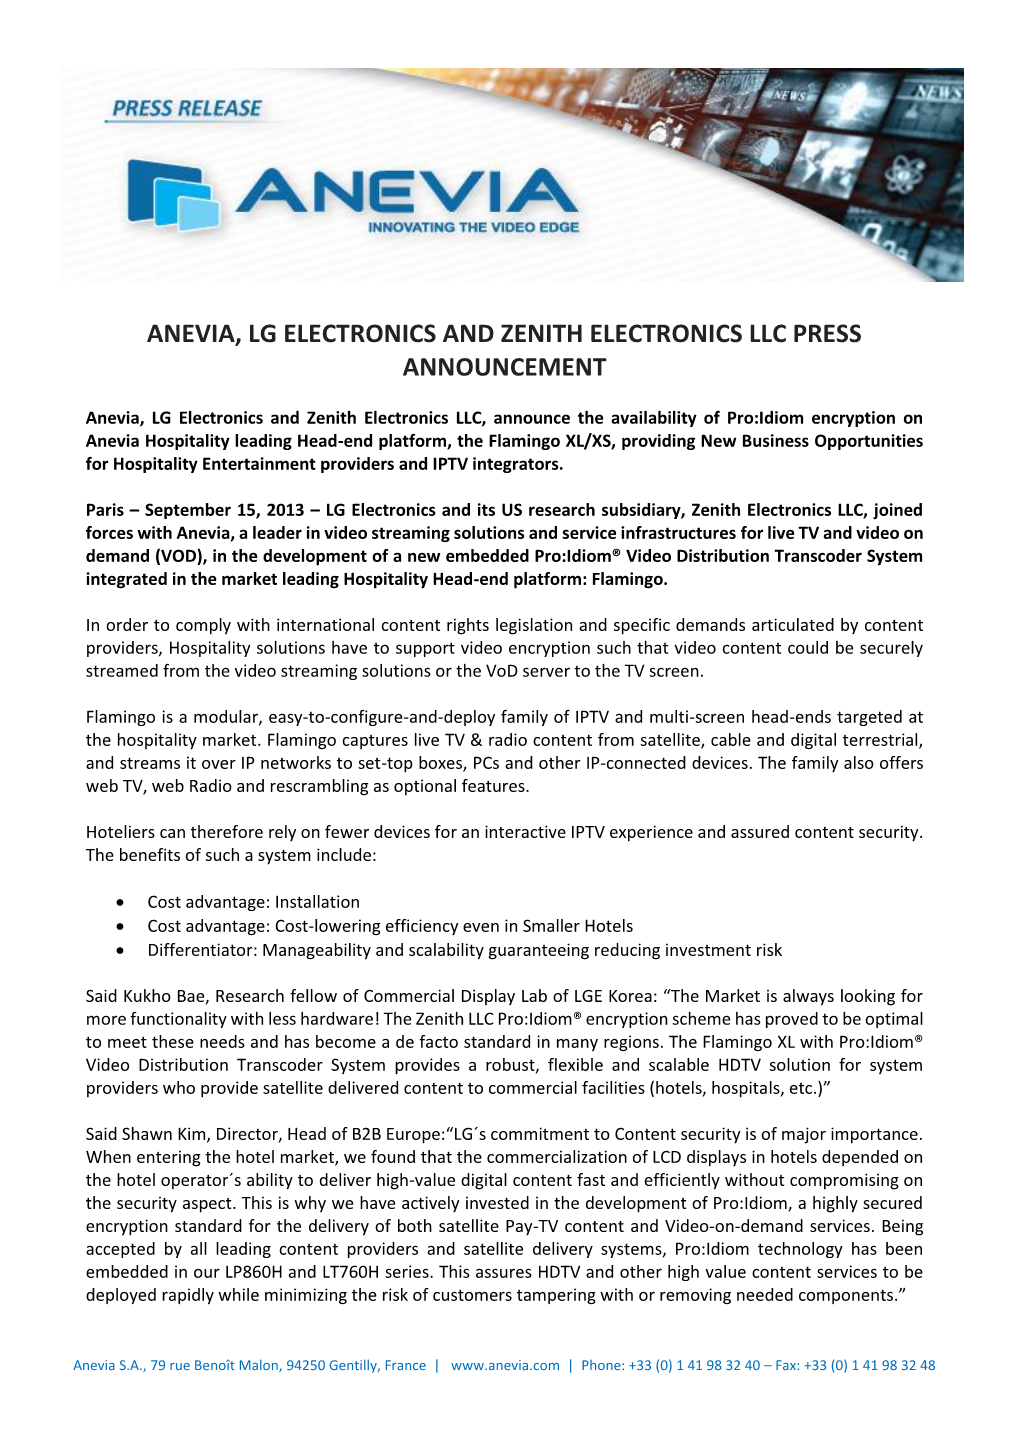 Anevia, Lg Electronics and Zenith Electronics Llc Press Announcement